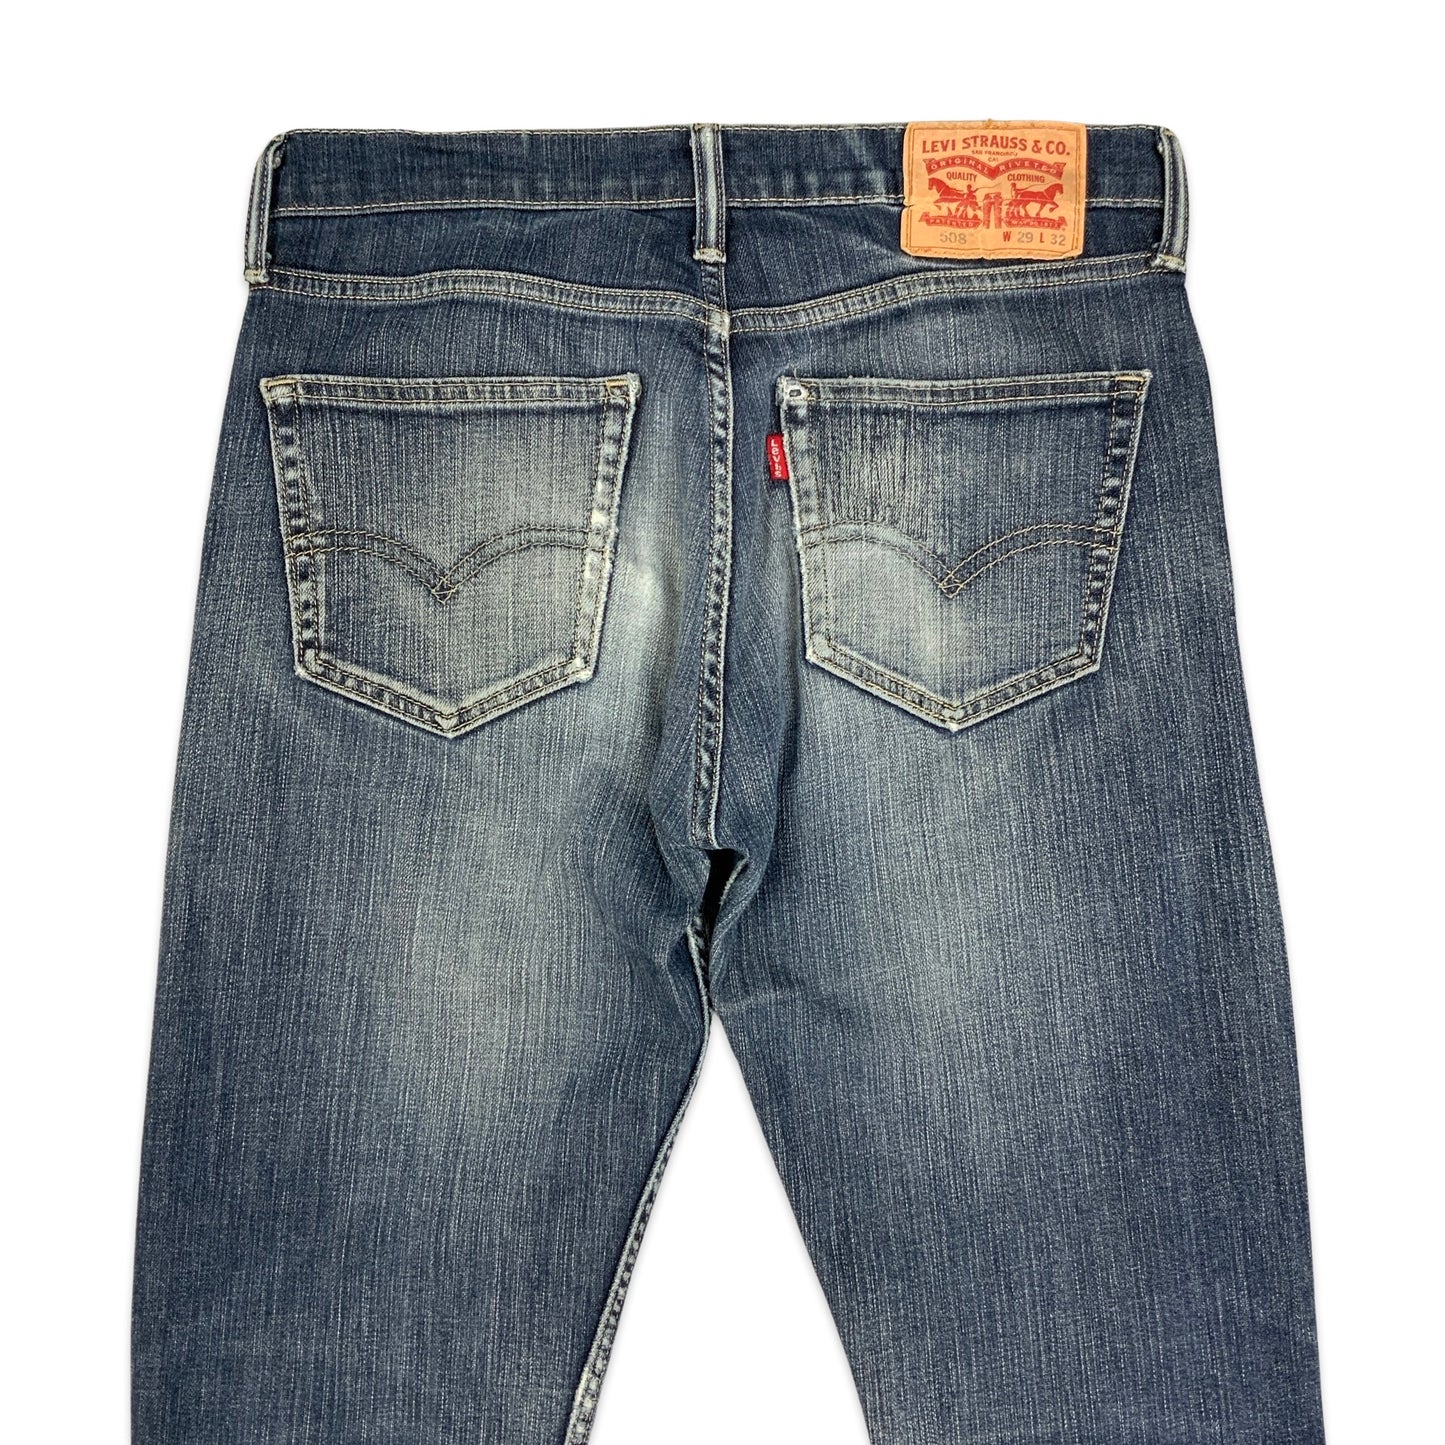 Levi's 508 Tapered Jeans 30W 30L